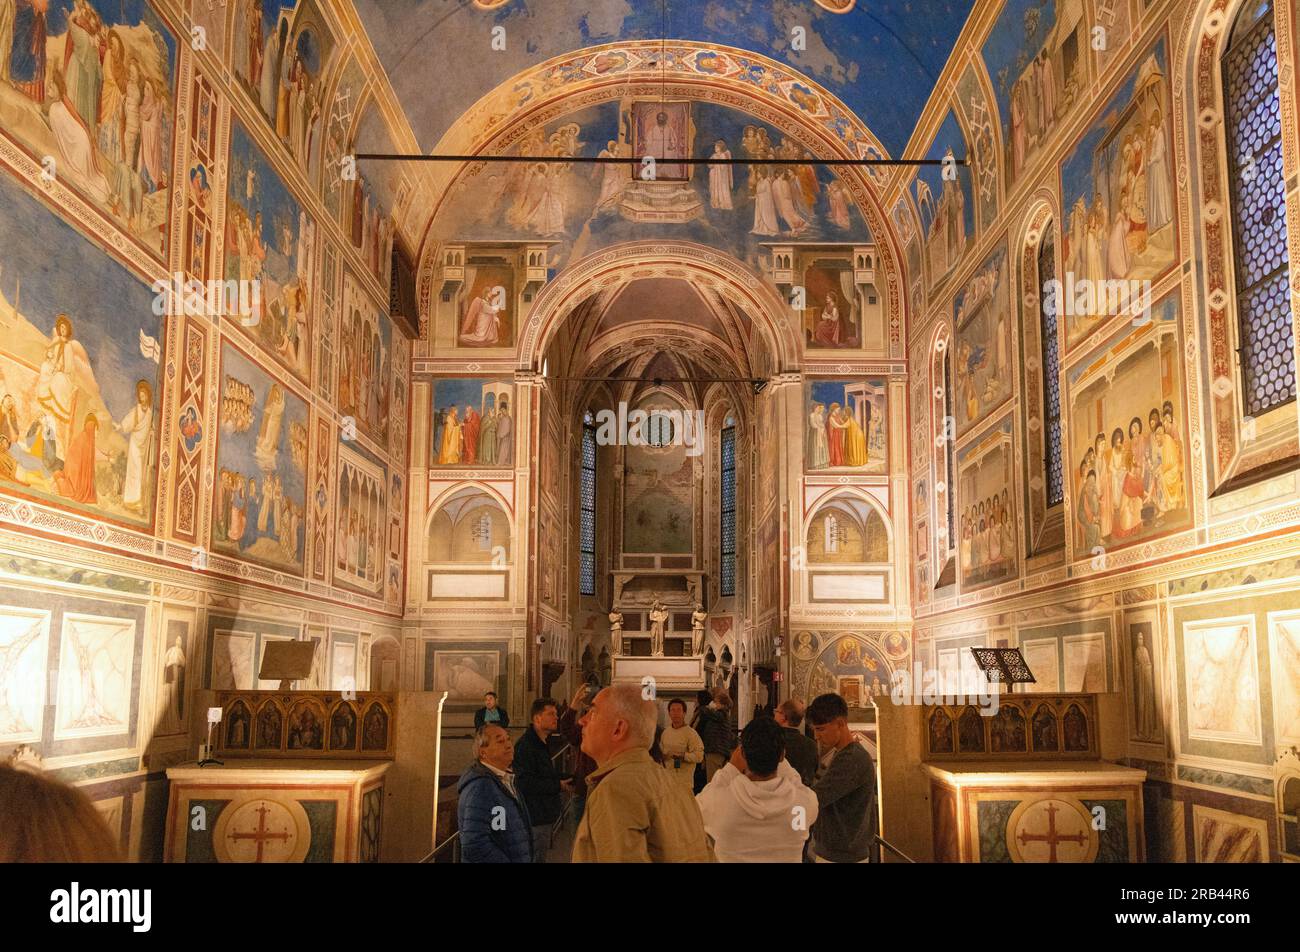 Padua Italy tourism; Visitors at Giottos frescoes, the Scrovegni Chapel interior, Padua Italy Stock Photo